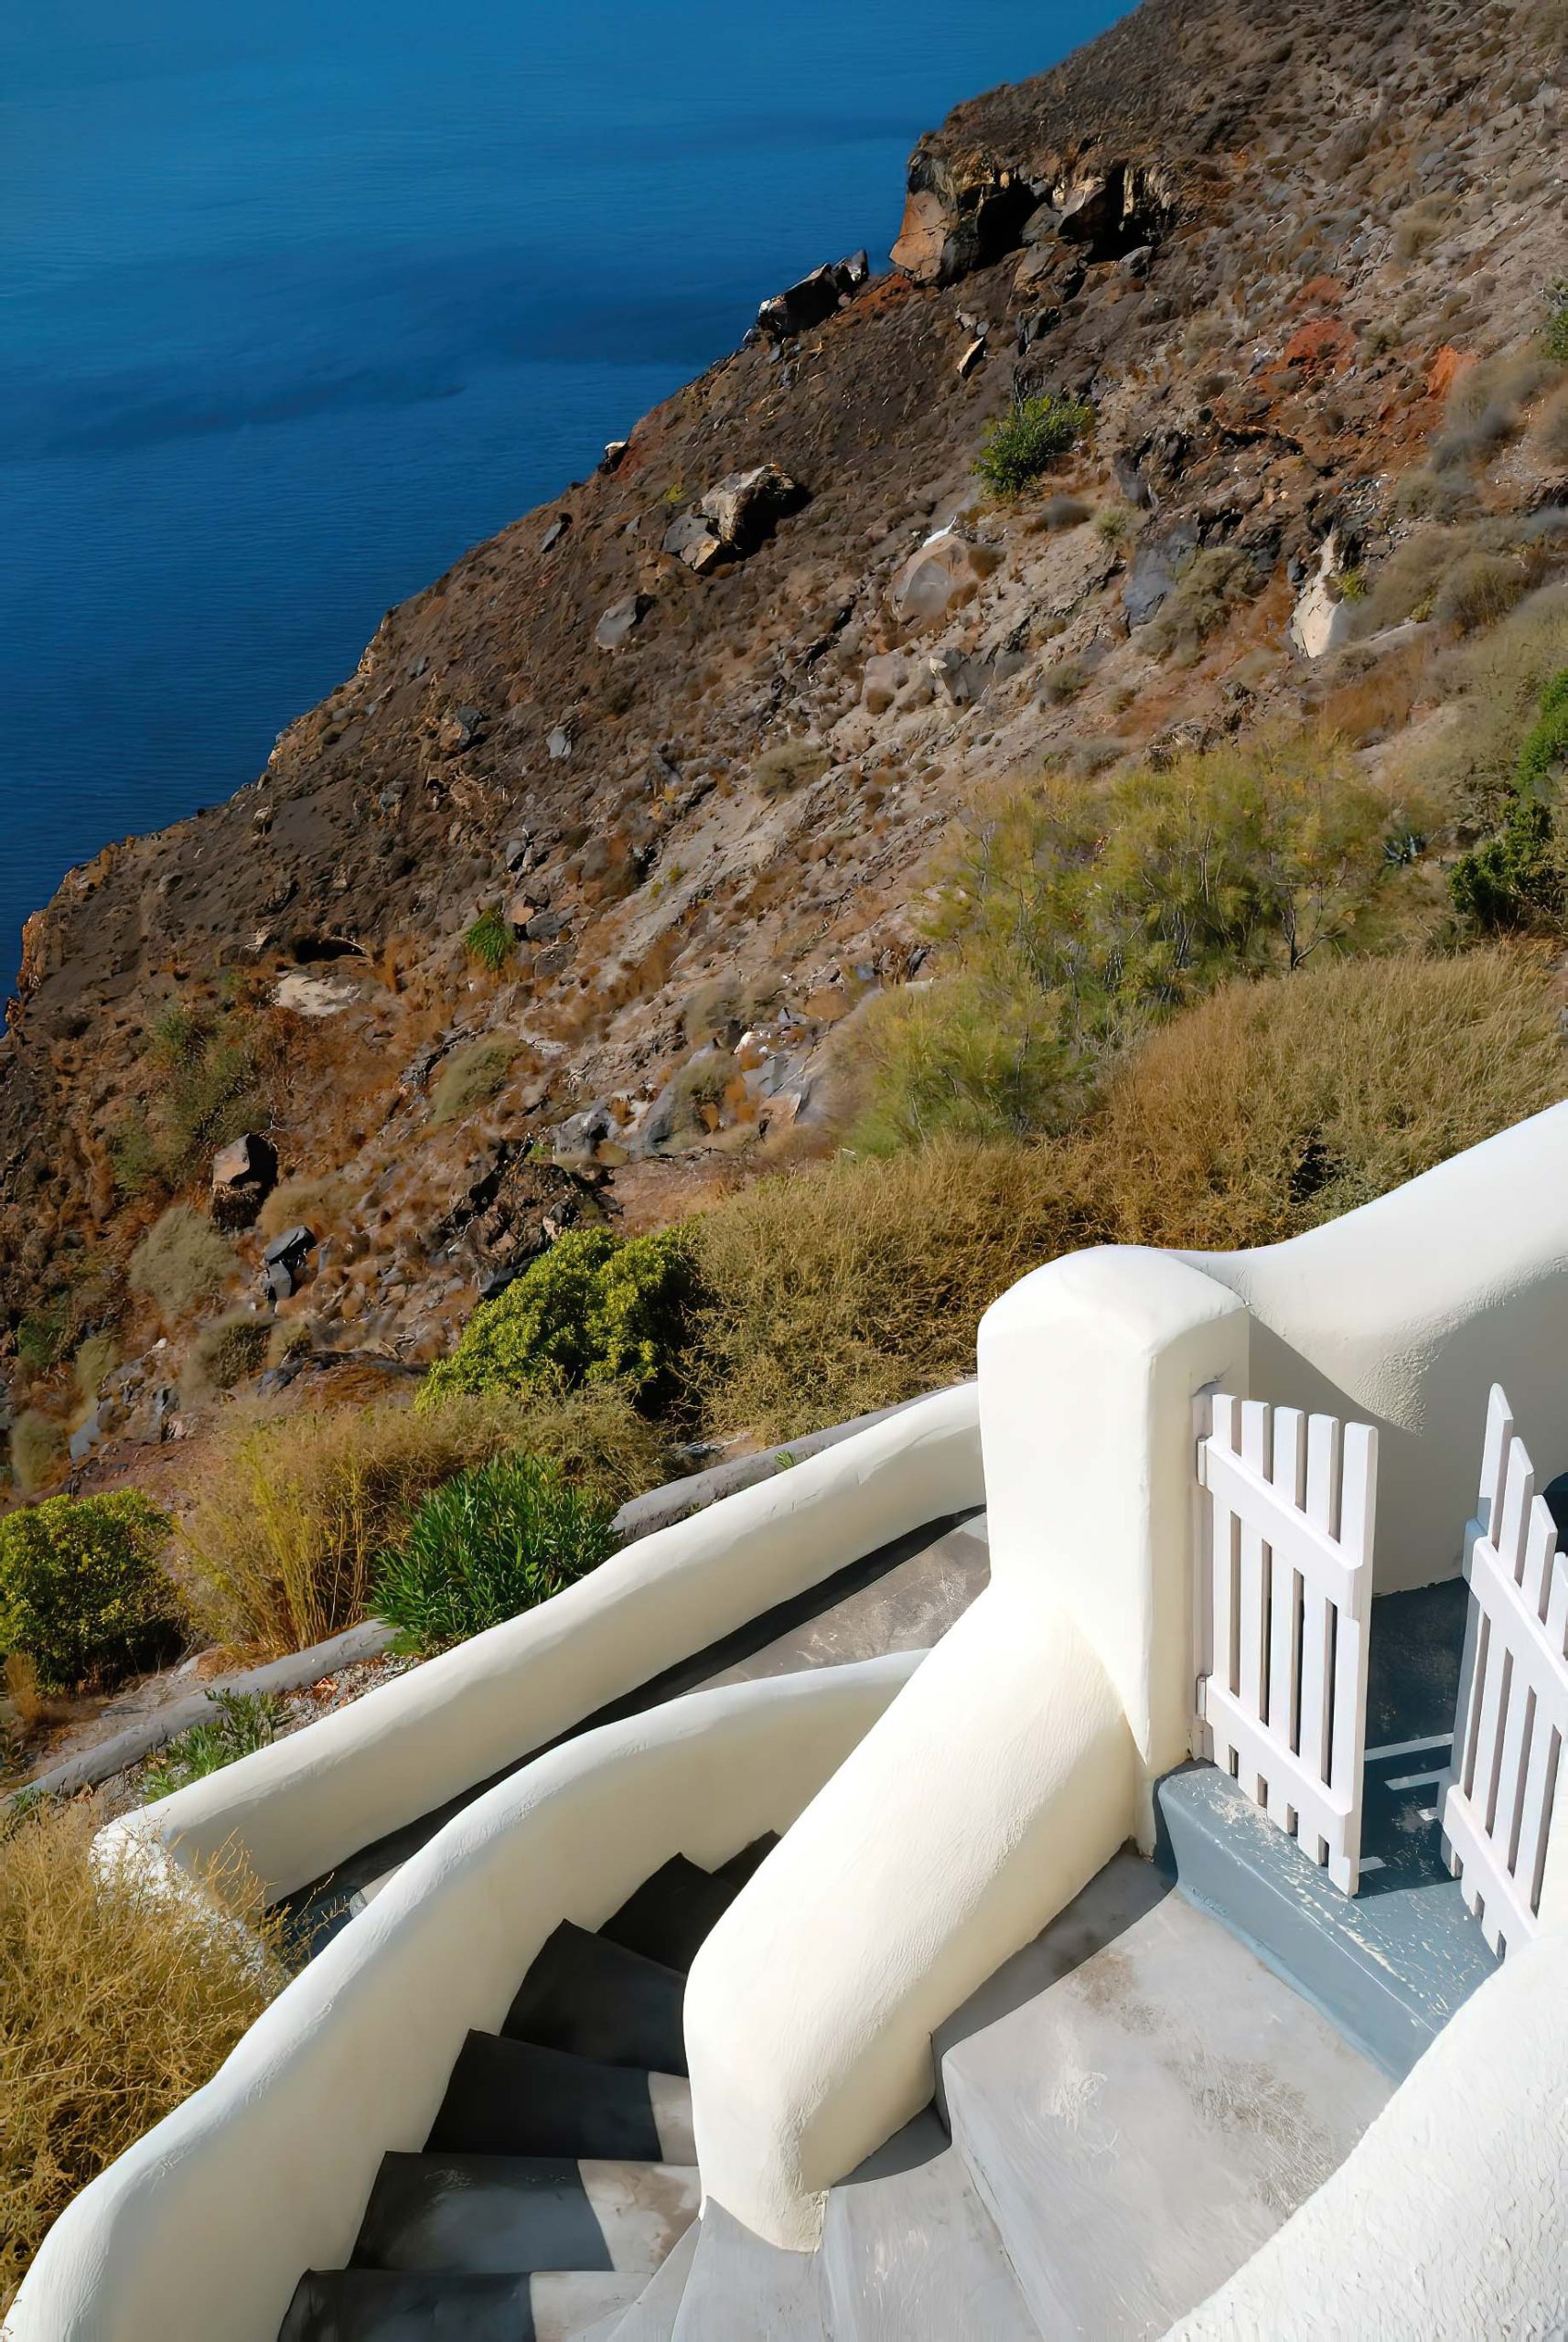 Mystique Hotel Santorini – Oia, Santorini Island, Greece – Cycladic Architecture Stairs